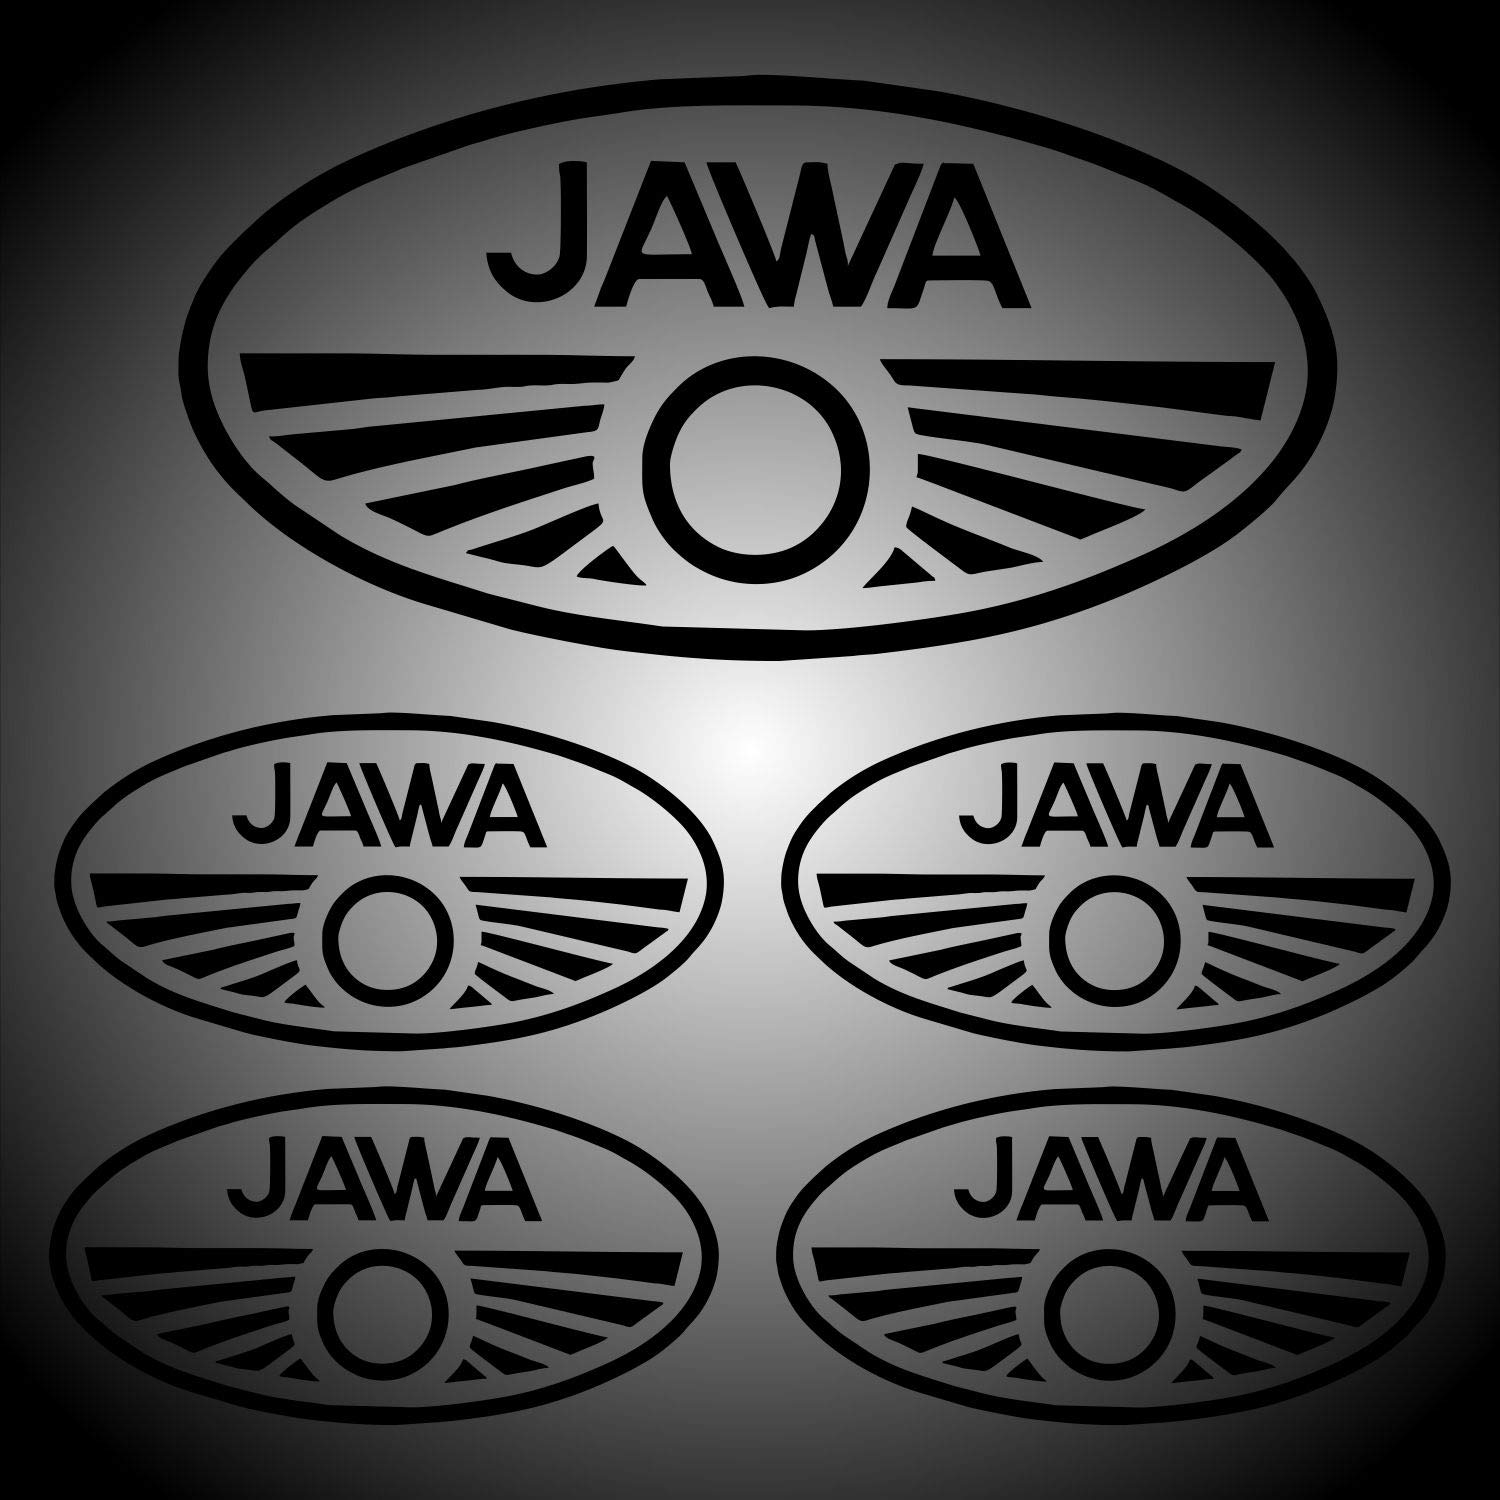 myrockshirt Jawa Sponsorset ca. 30cm Aufkleber für Motorrad Bike Roller Mofa Sticker Decal Tuningaufkleber von myrockshirt